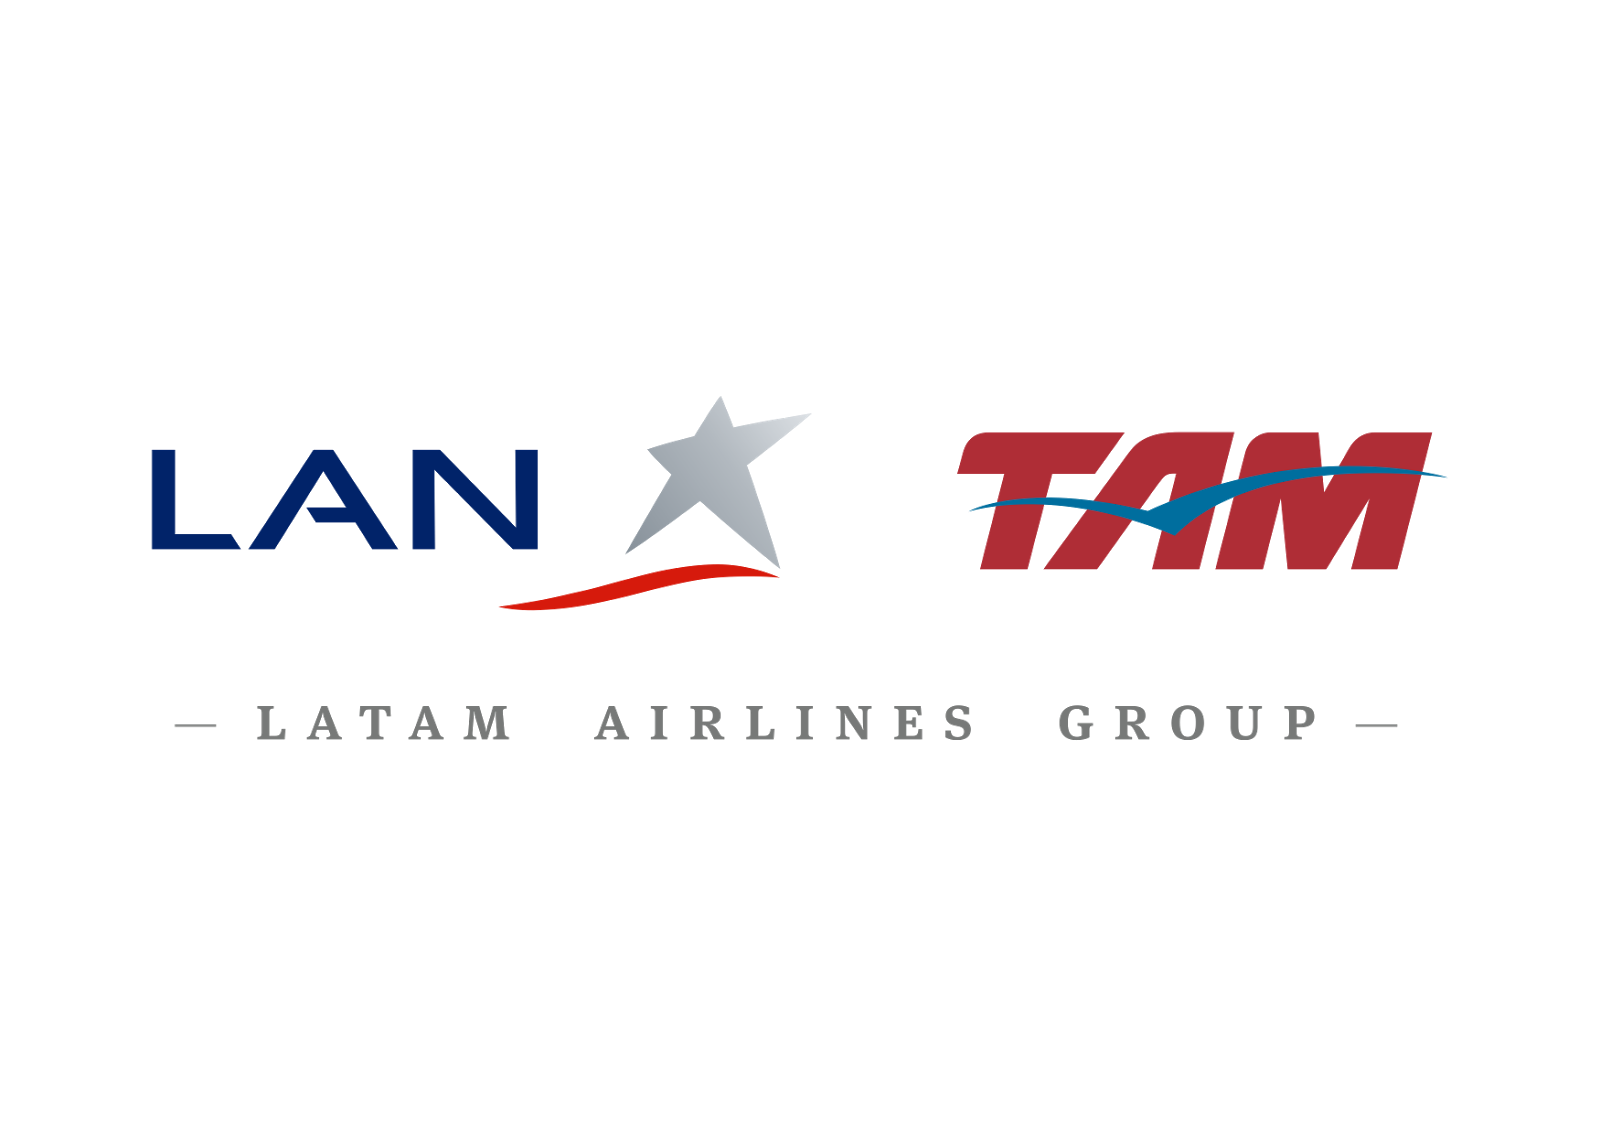 LATAM Airlines Brasil brings 